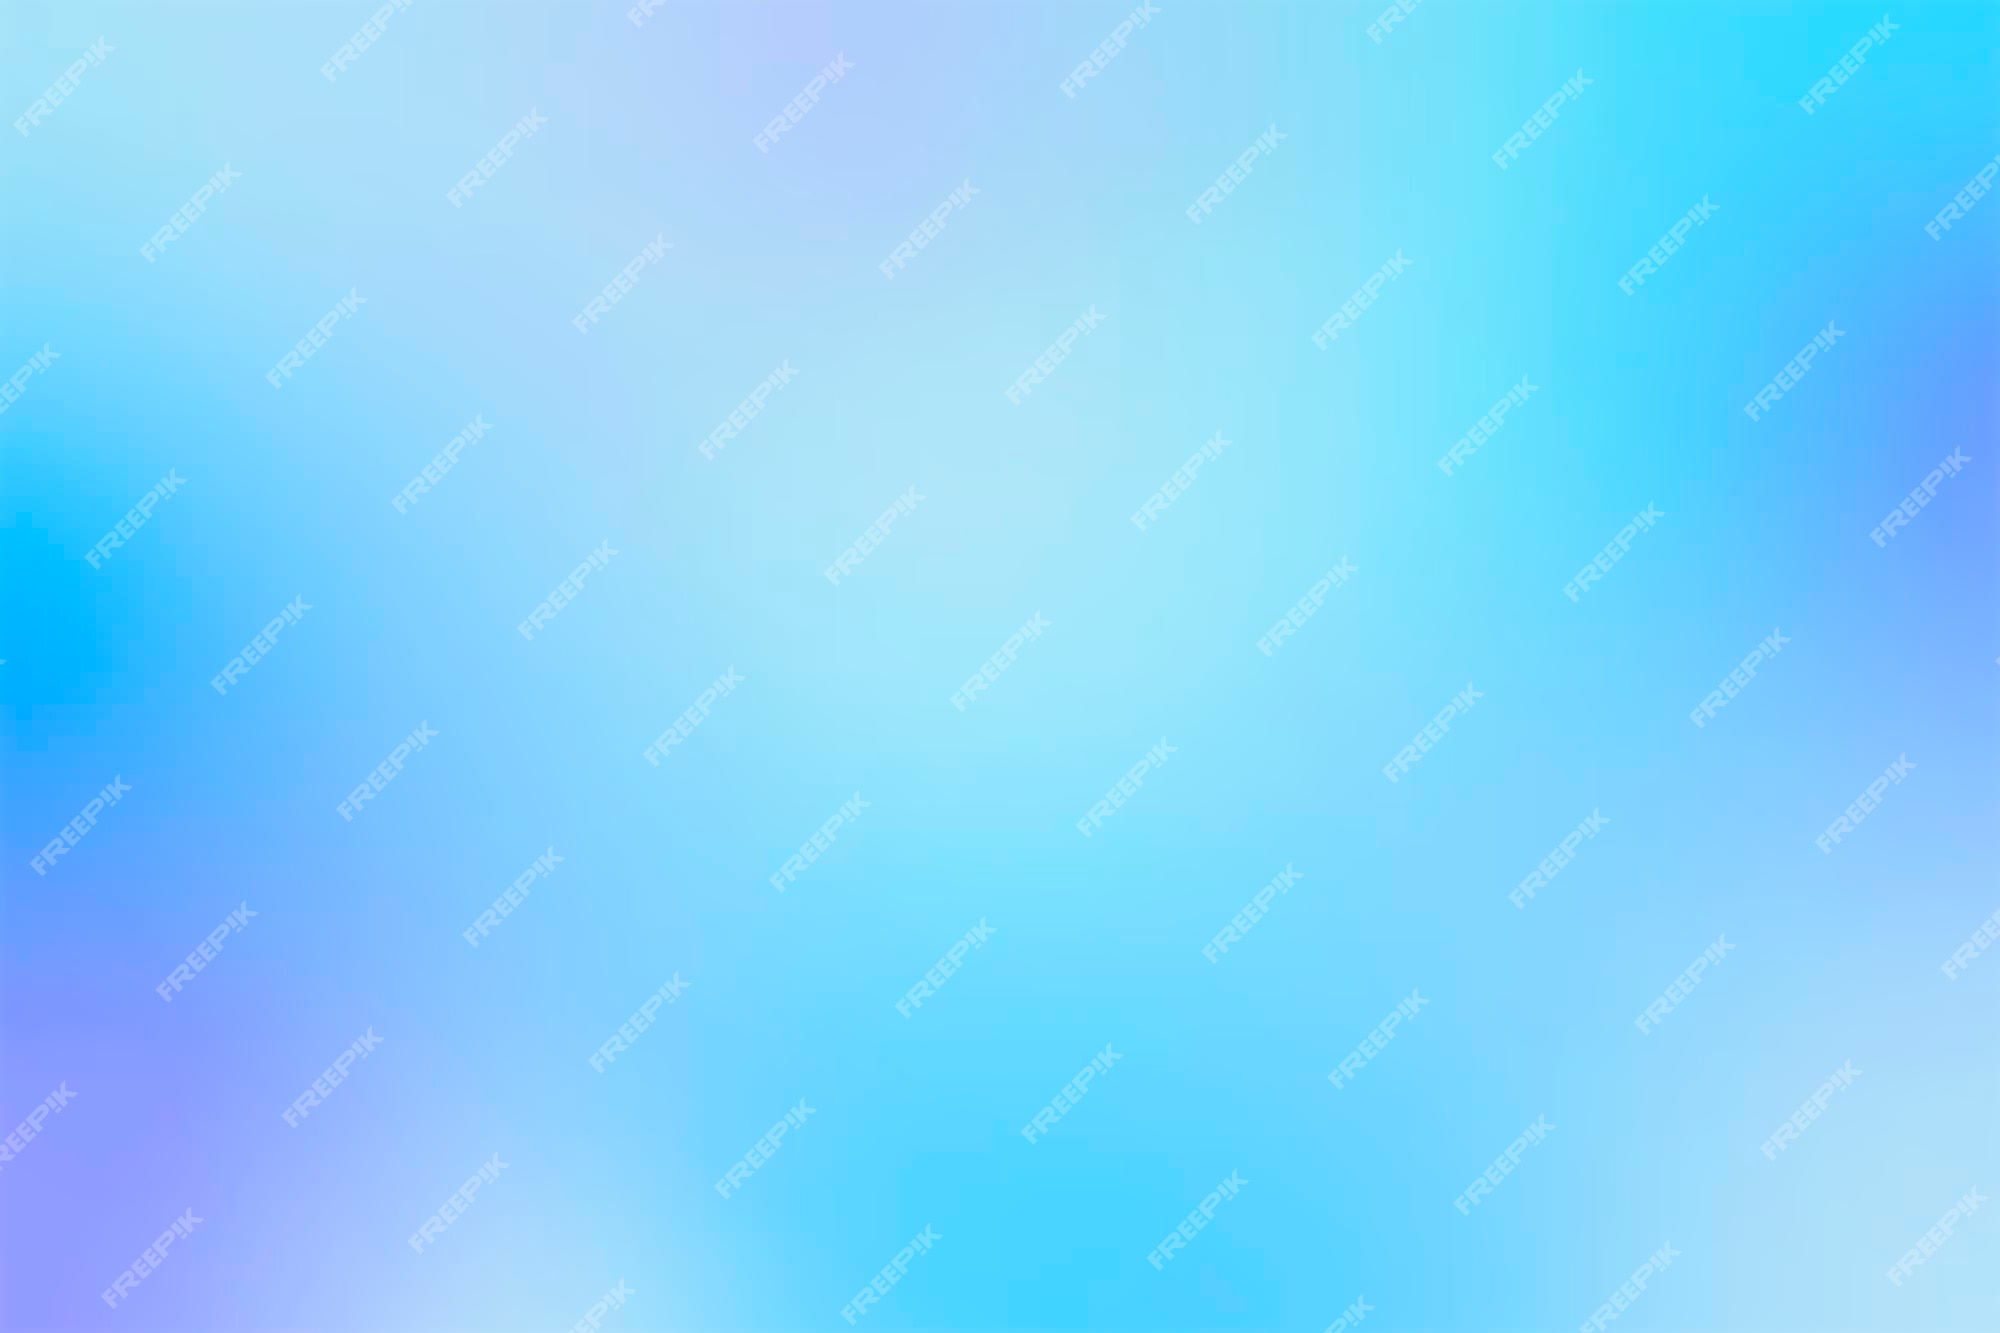 Light Blue Gradient Background Images - Free Download on Freepik